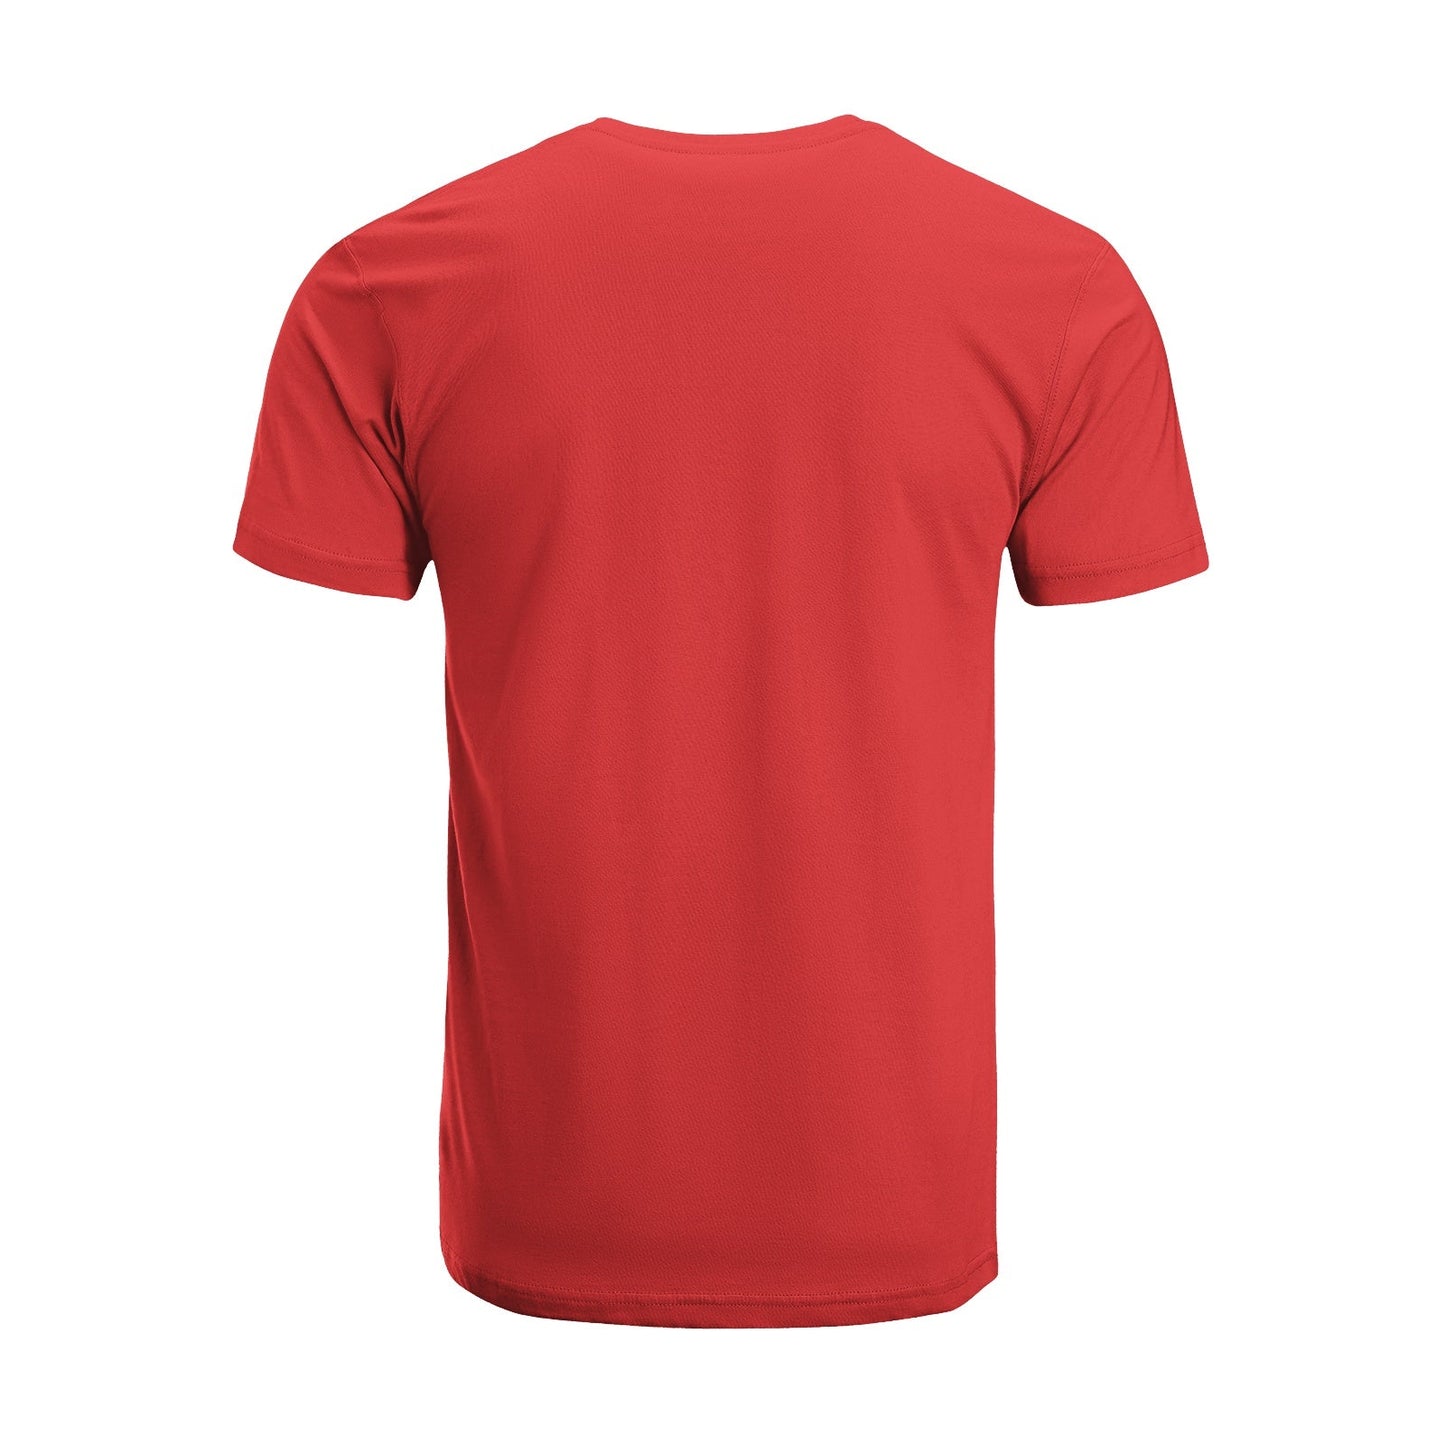 Unisex Short Sleeve Crew Neck Cotton Jersey T-Shirt VEGAN 18